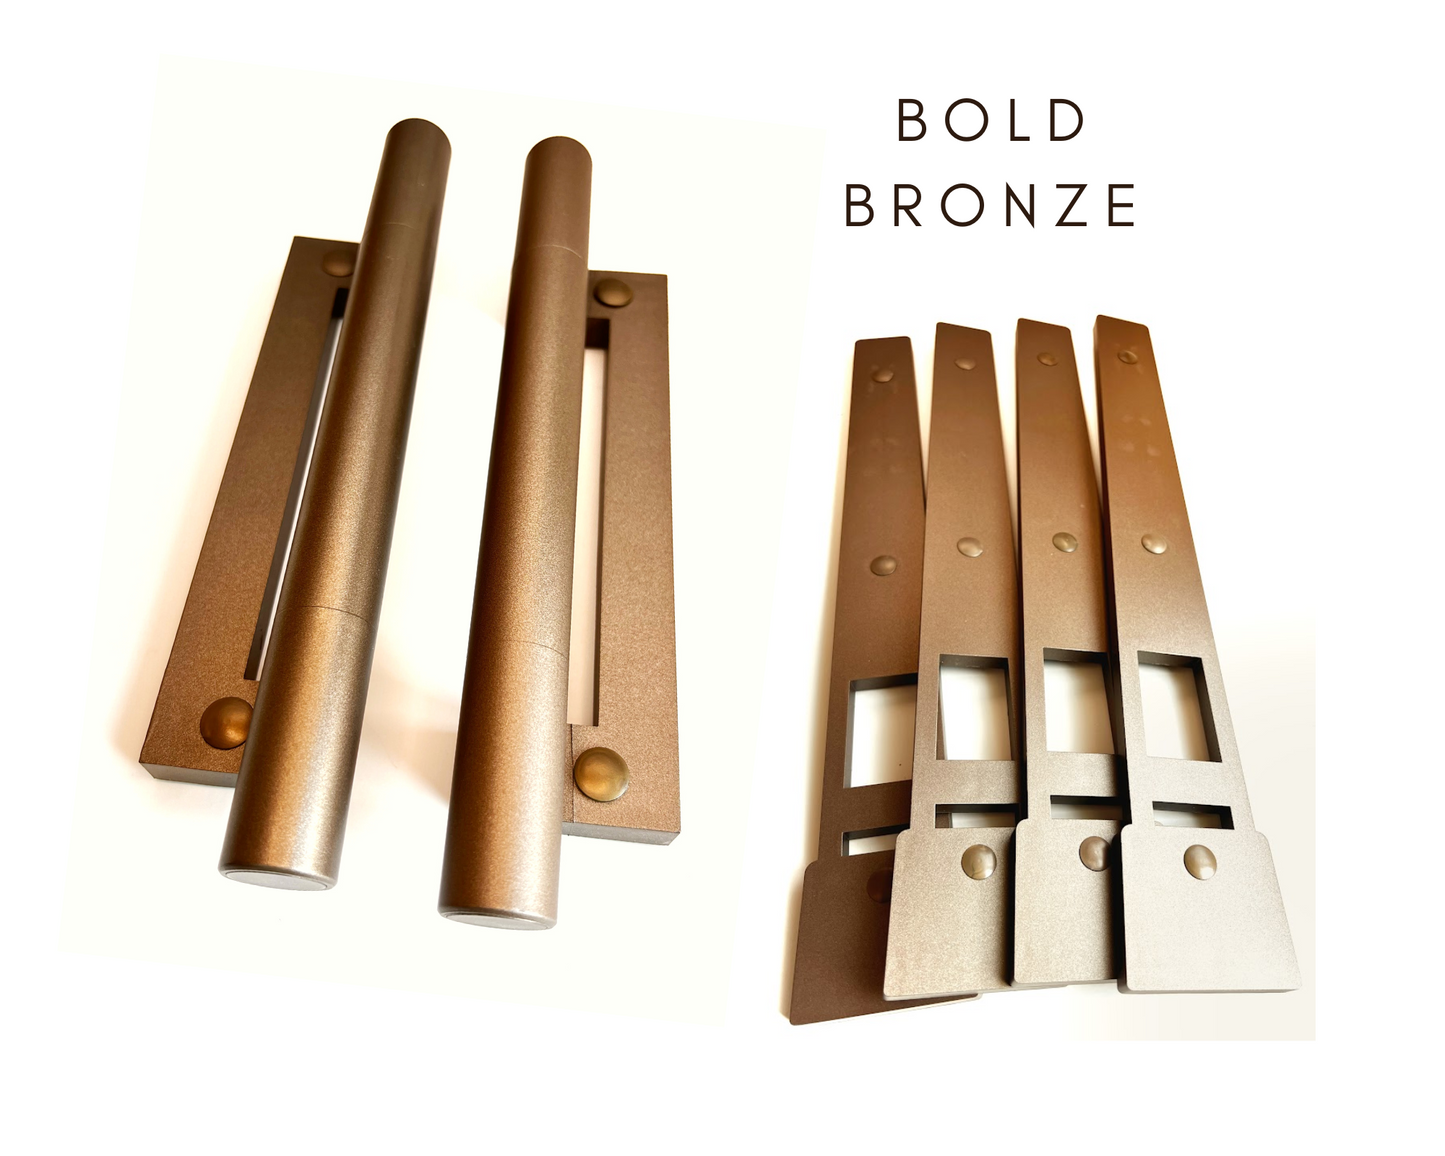 Decorative Magnetic Garage Door Hardware Handles - Bold Bronze Glamour Accents